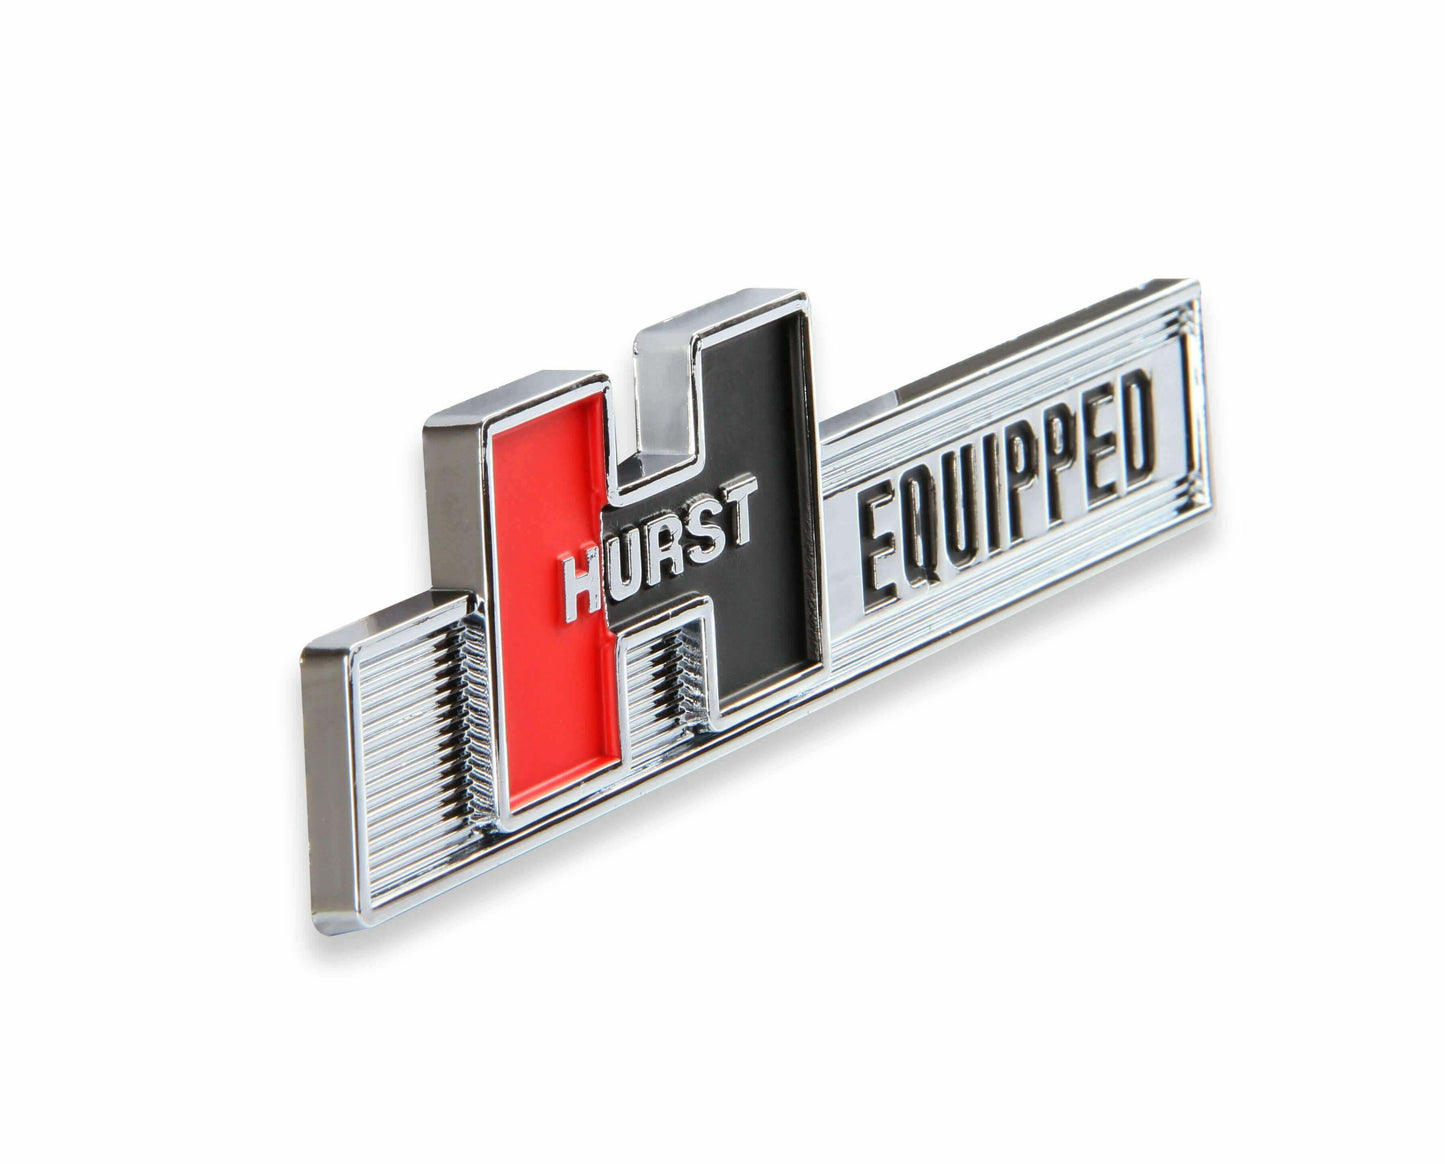 Hurst Equipped Emblem - 1361000